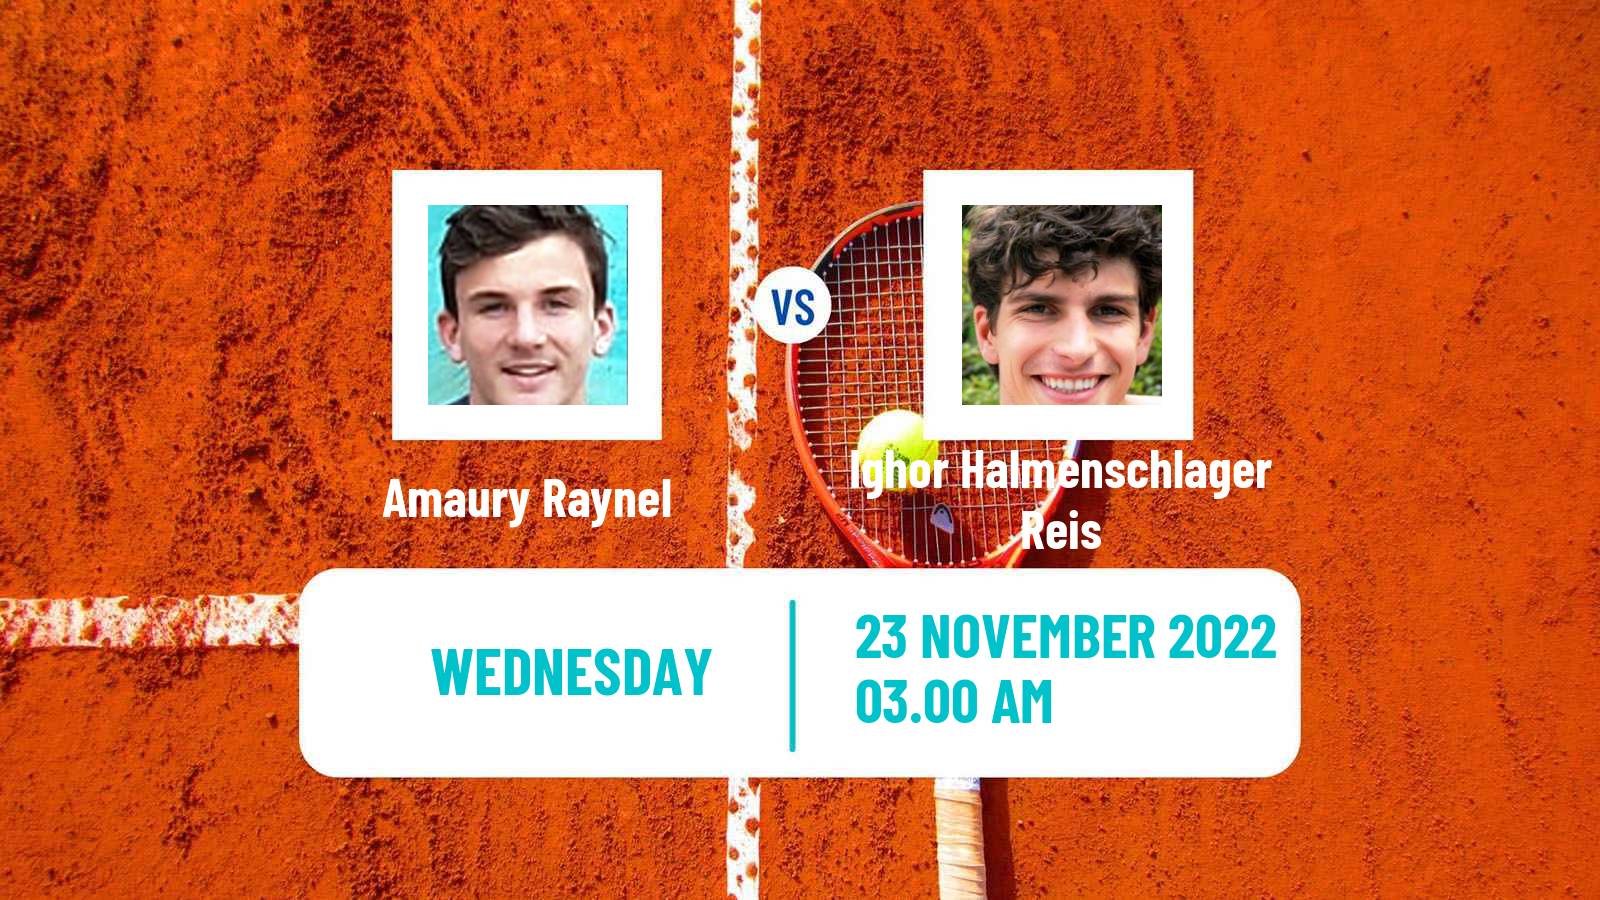 Tennis ITF Tournaments Amaury Raynel - Ighor Halmenschlager Reis